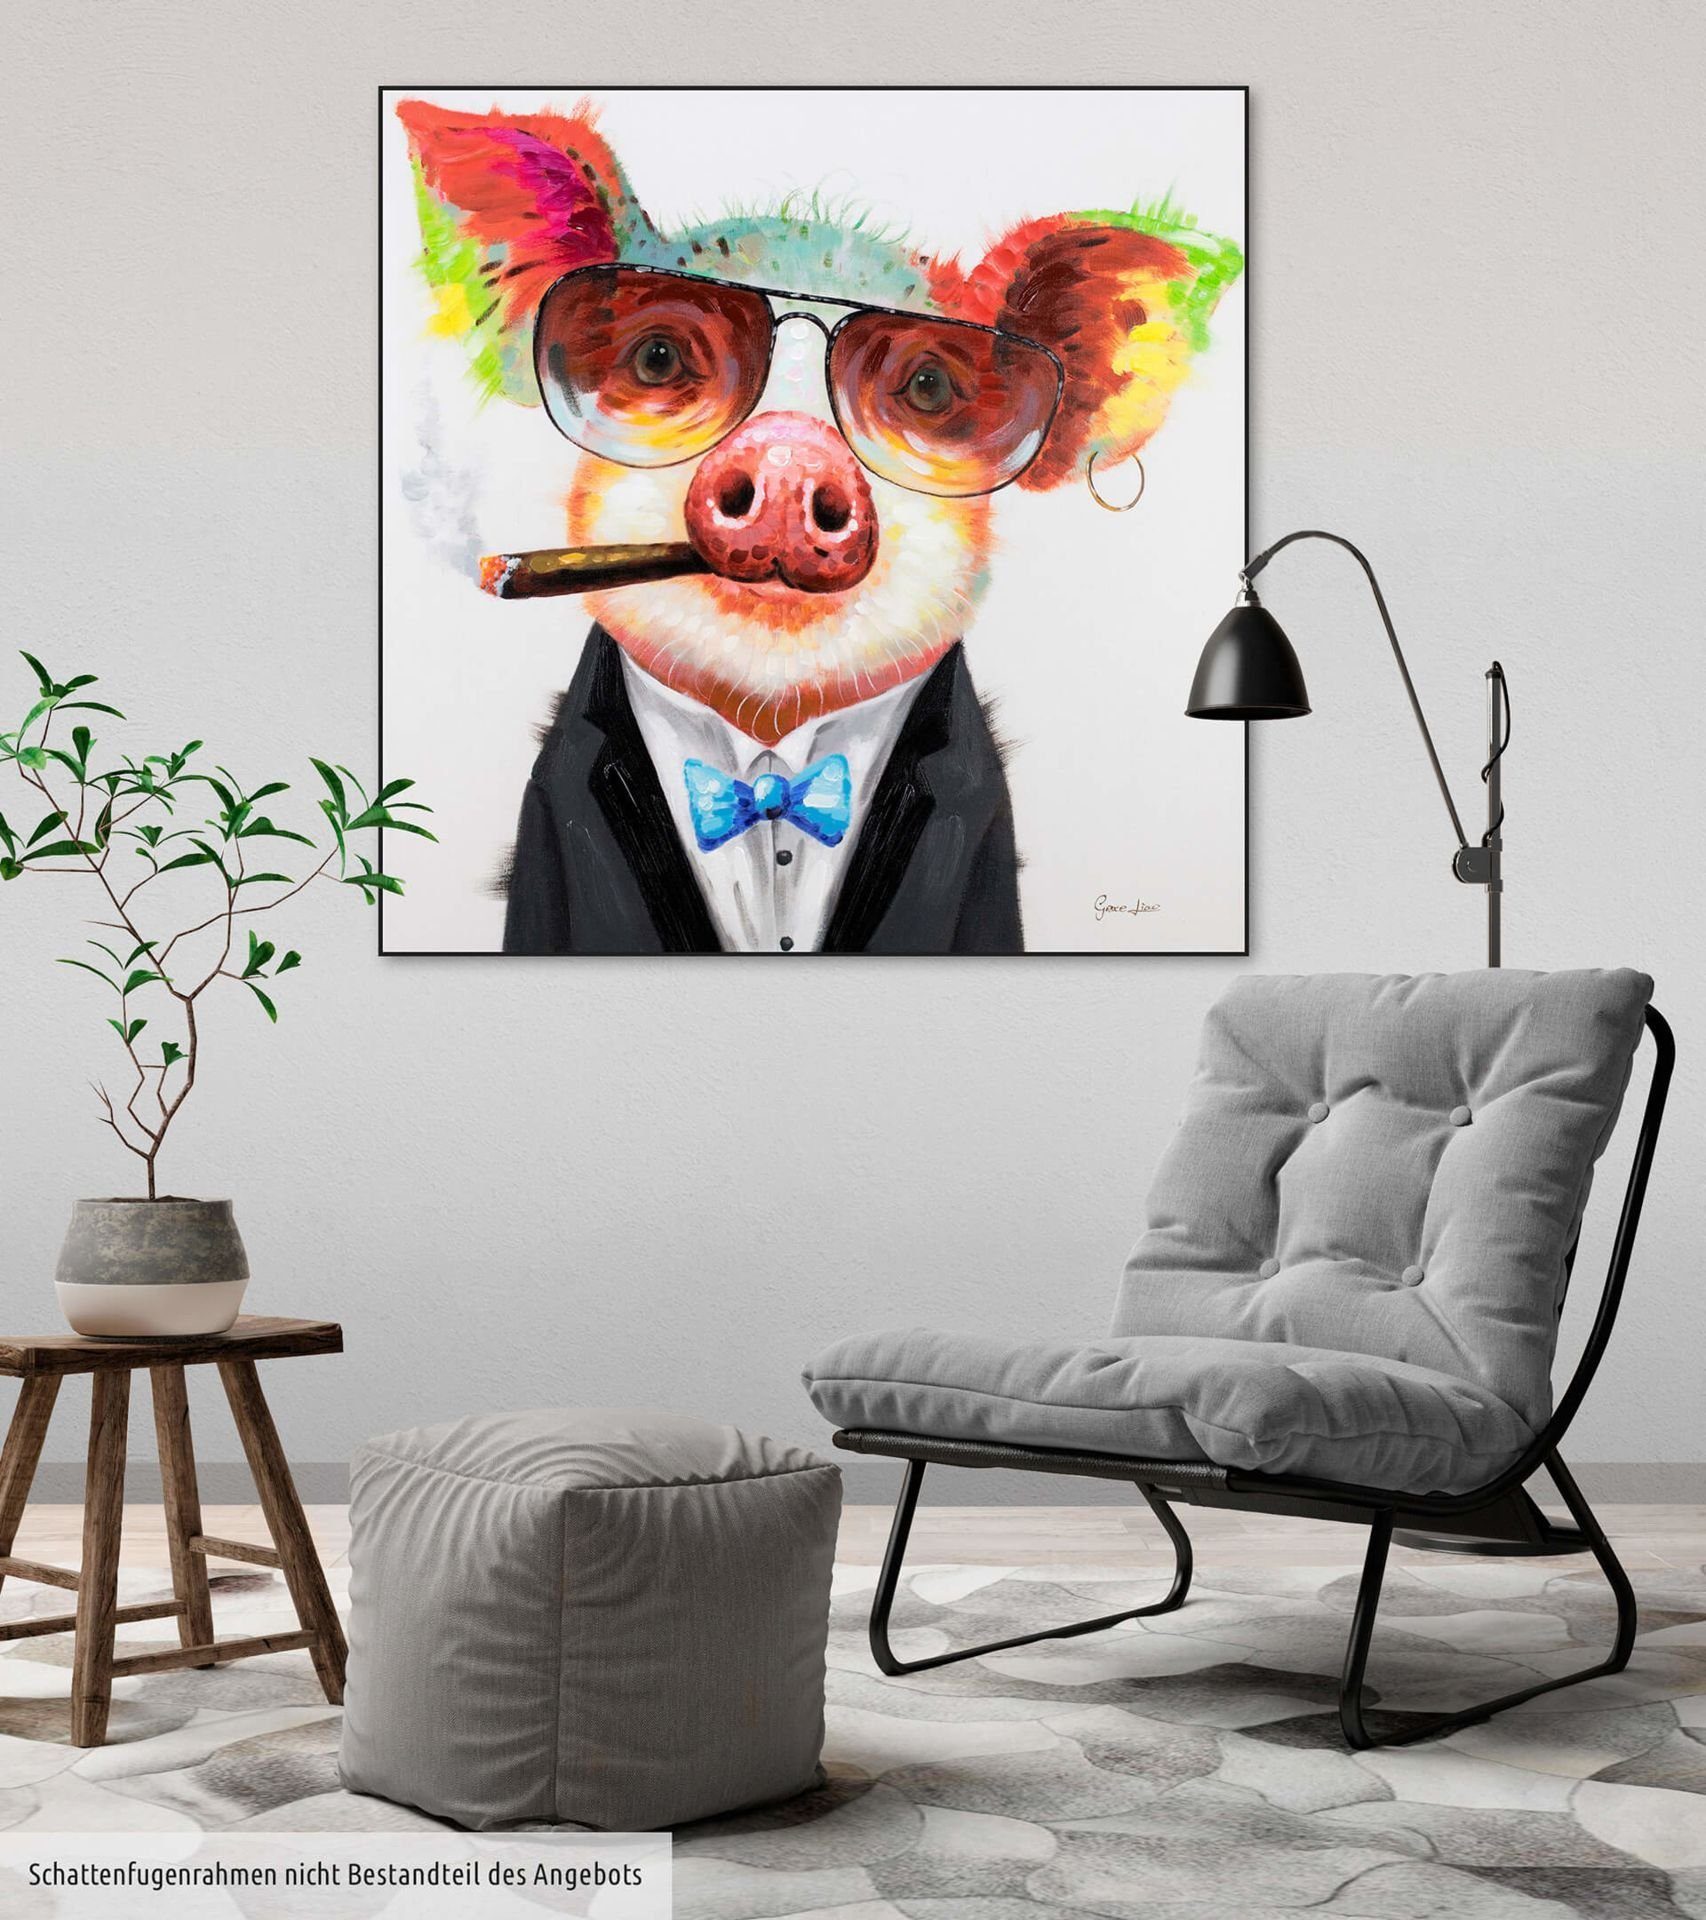 KUNSTLOFT Gemälde Bacon Smoking cm, Leinwandbild Hot 80x80 Wohnzimmer Wandbild HANDGEMALT 100